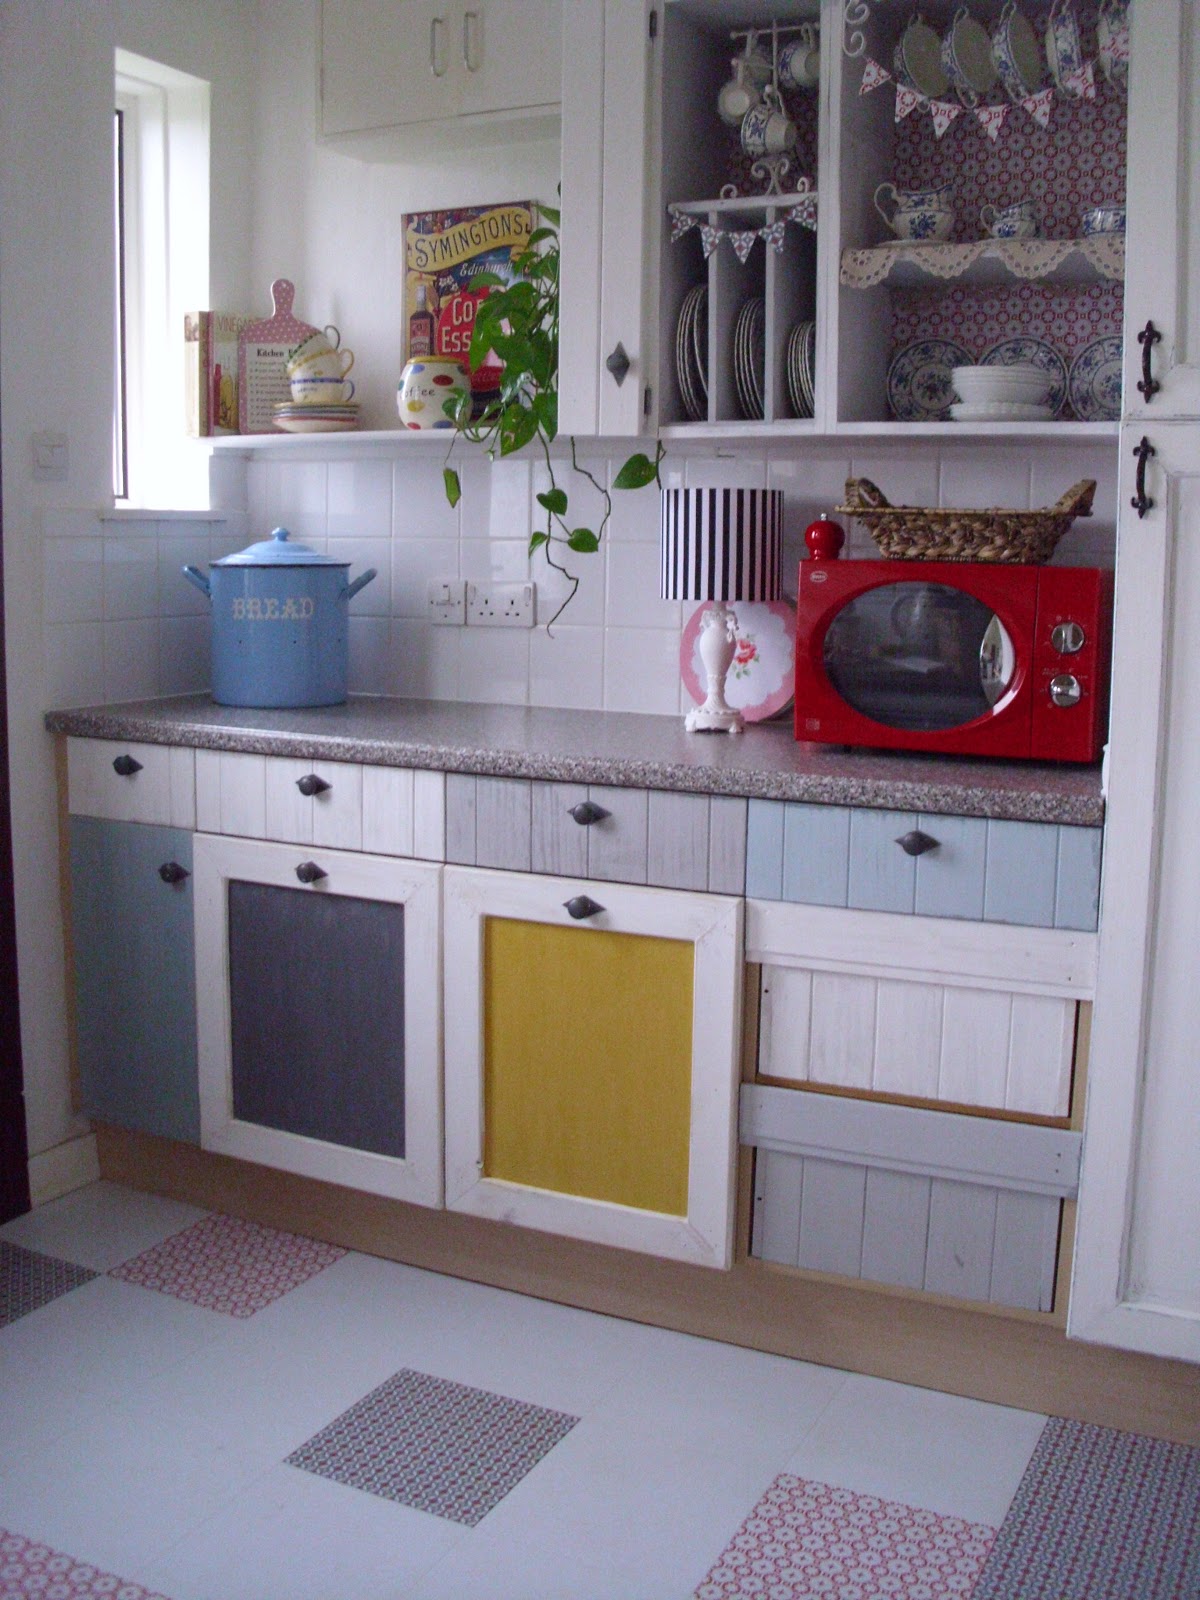 JiggleMaWiggle Upcycled  wardobe into Kitchen  Cabinets